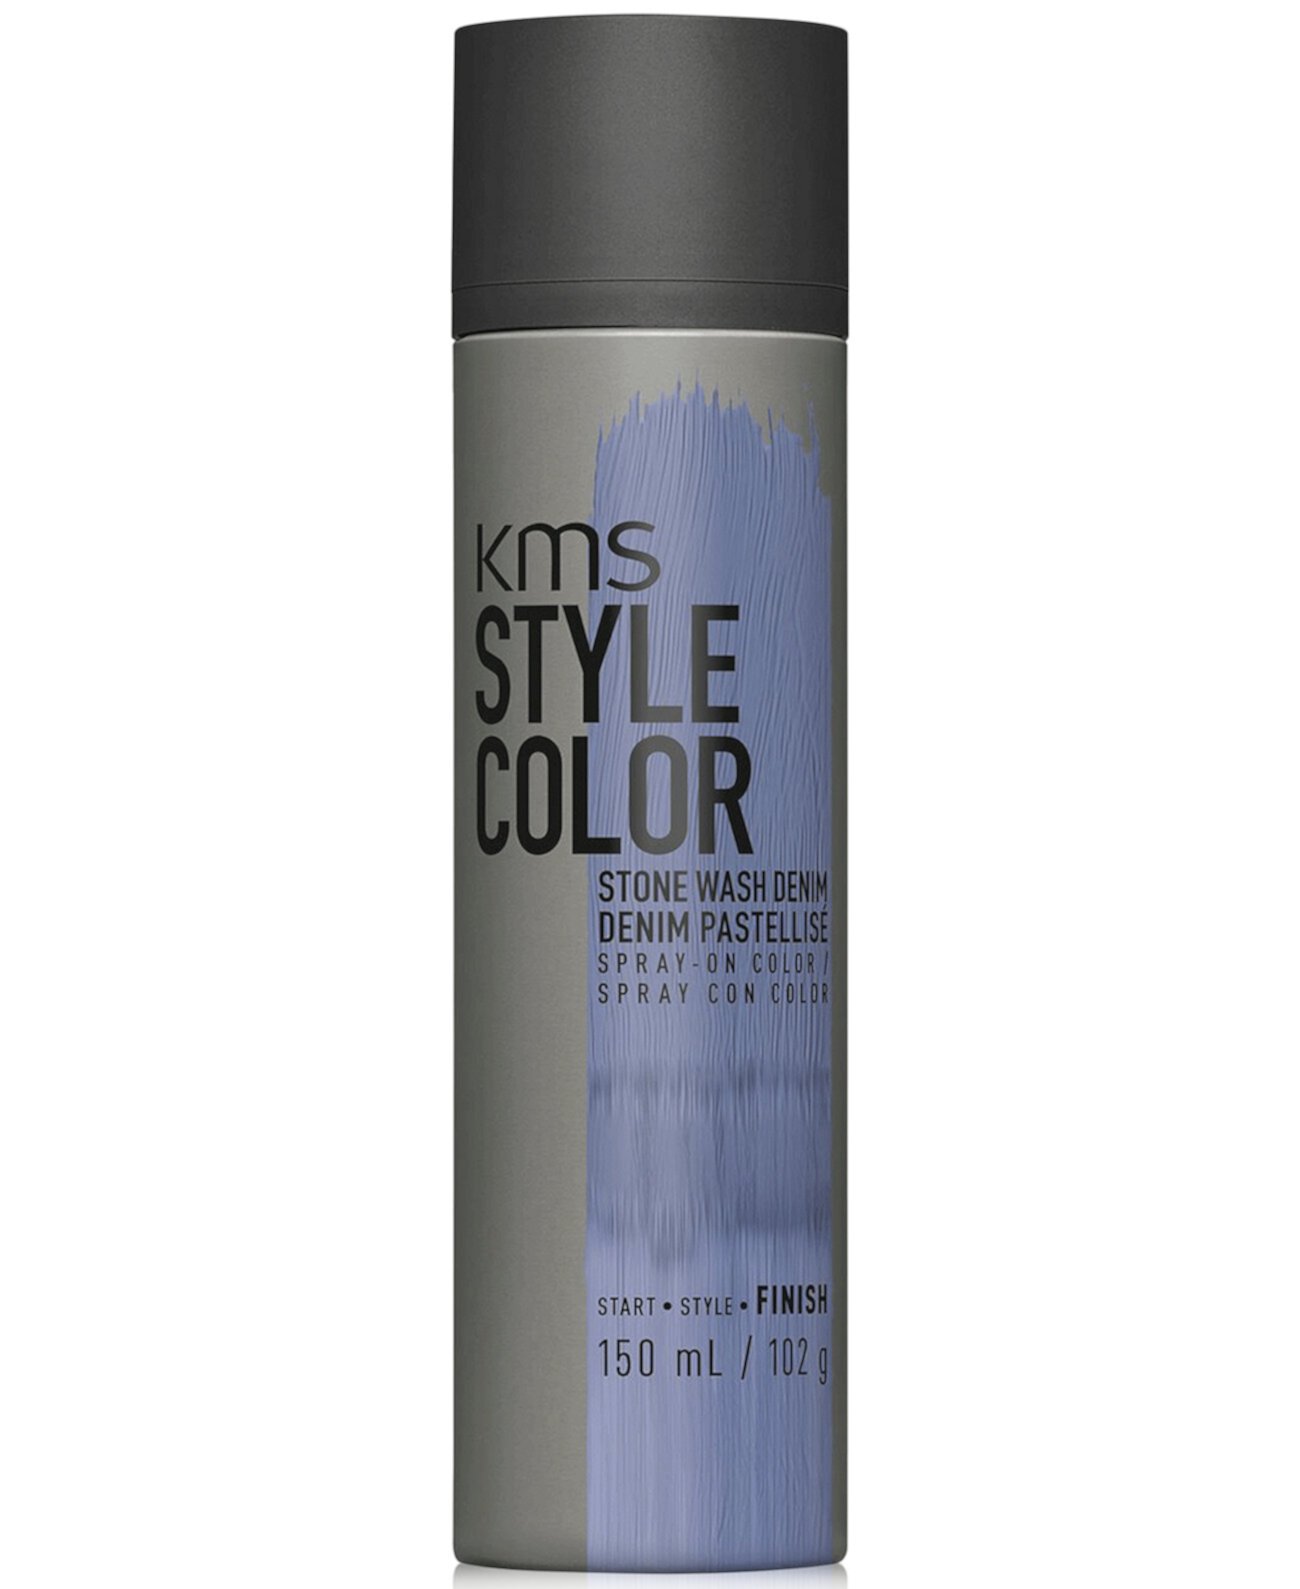 Style Color Spray - Stone Wash Denim, 5.1 oz., from PUREBEAUTY Salon & Spa KMS